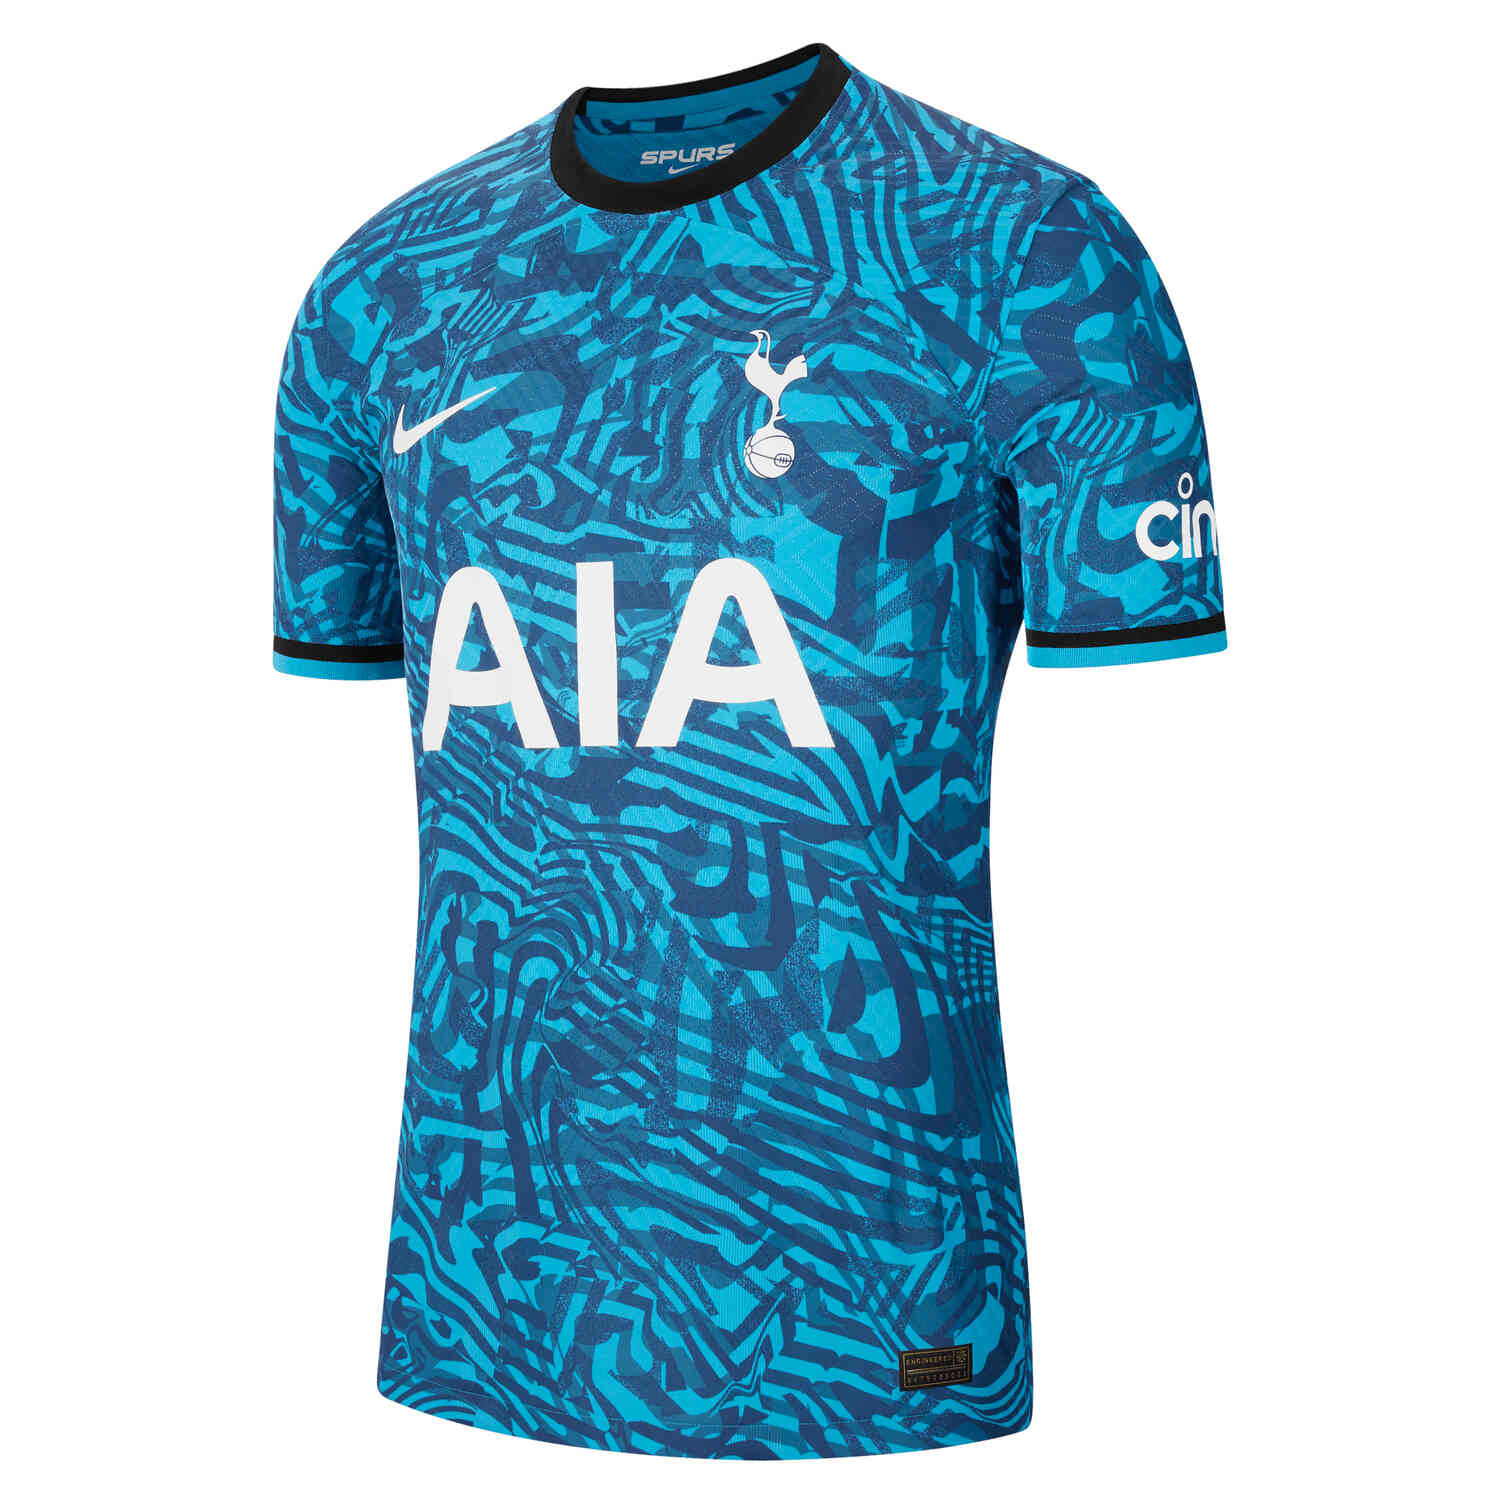 Tottenham home and away kits 2019/20: Nike release shirts for